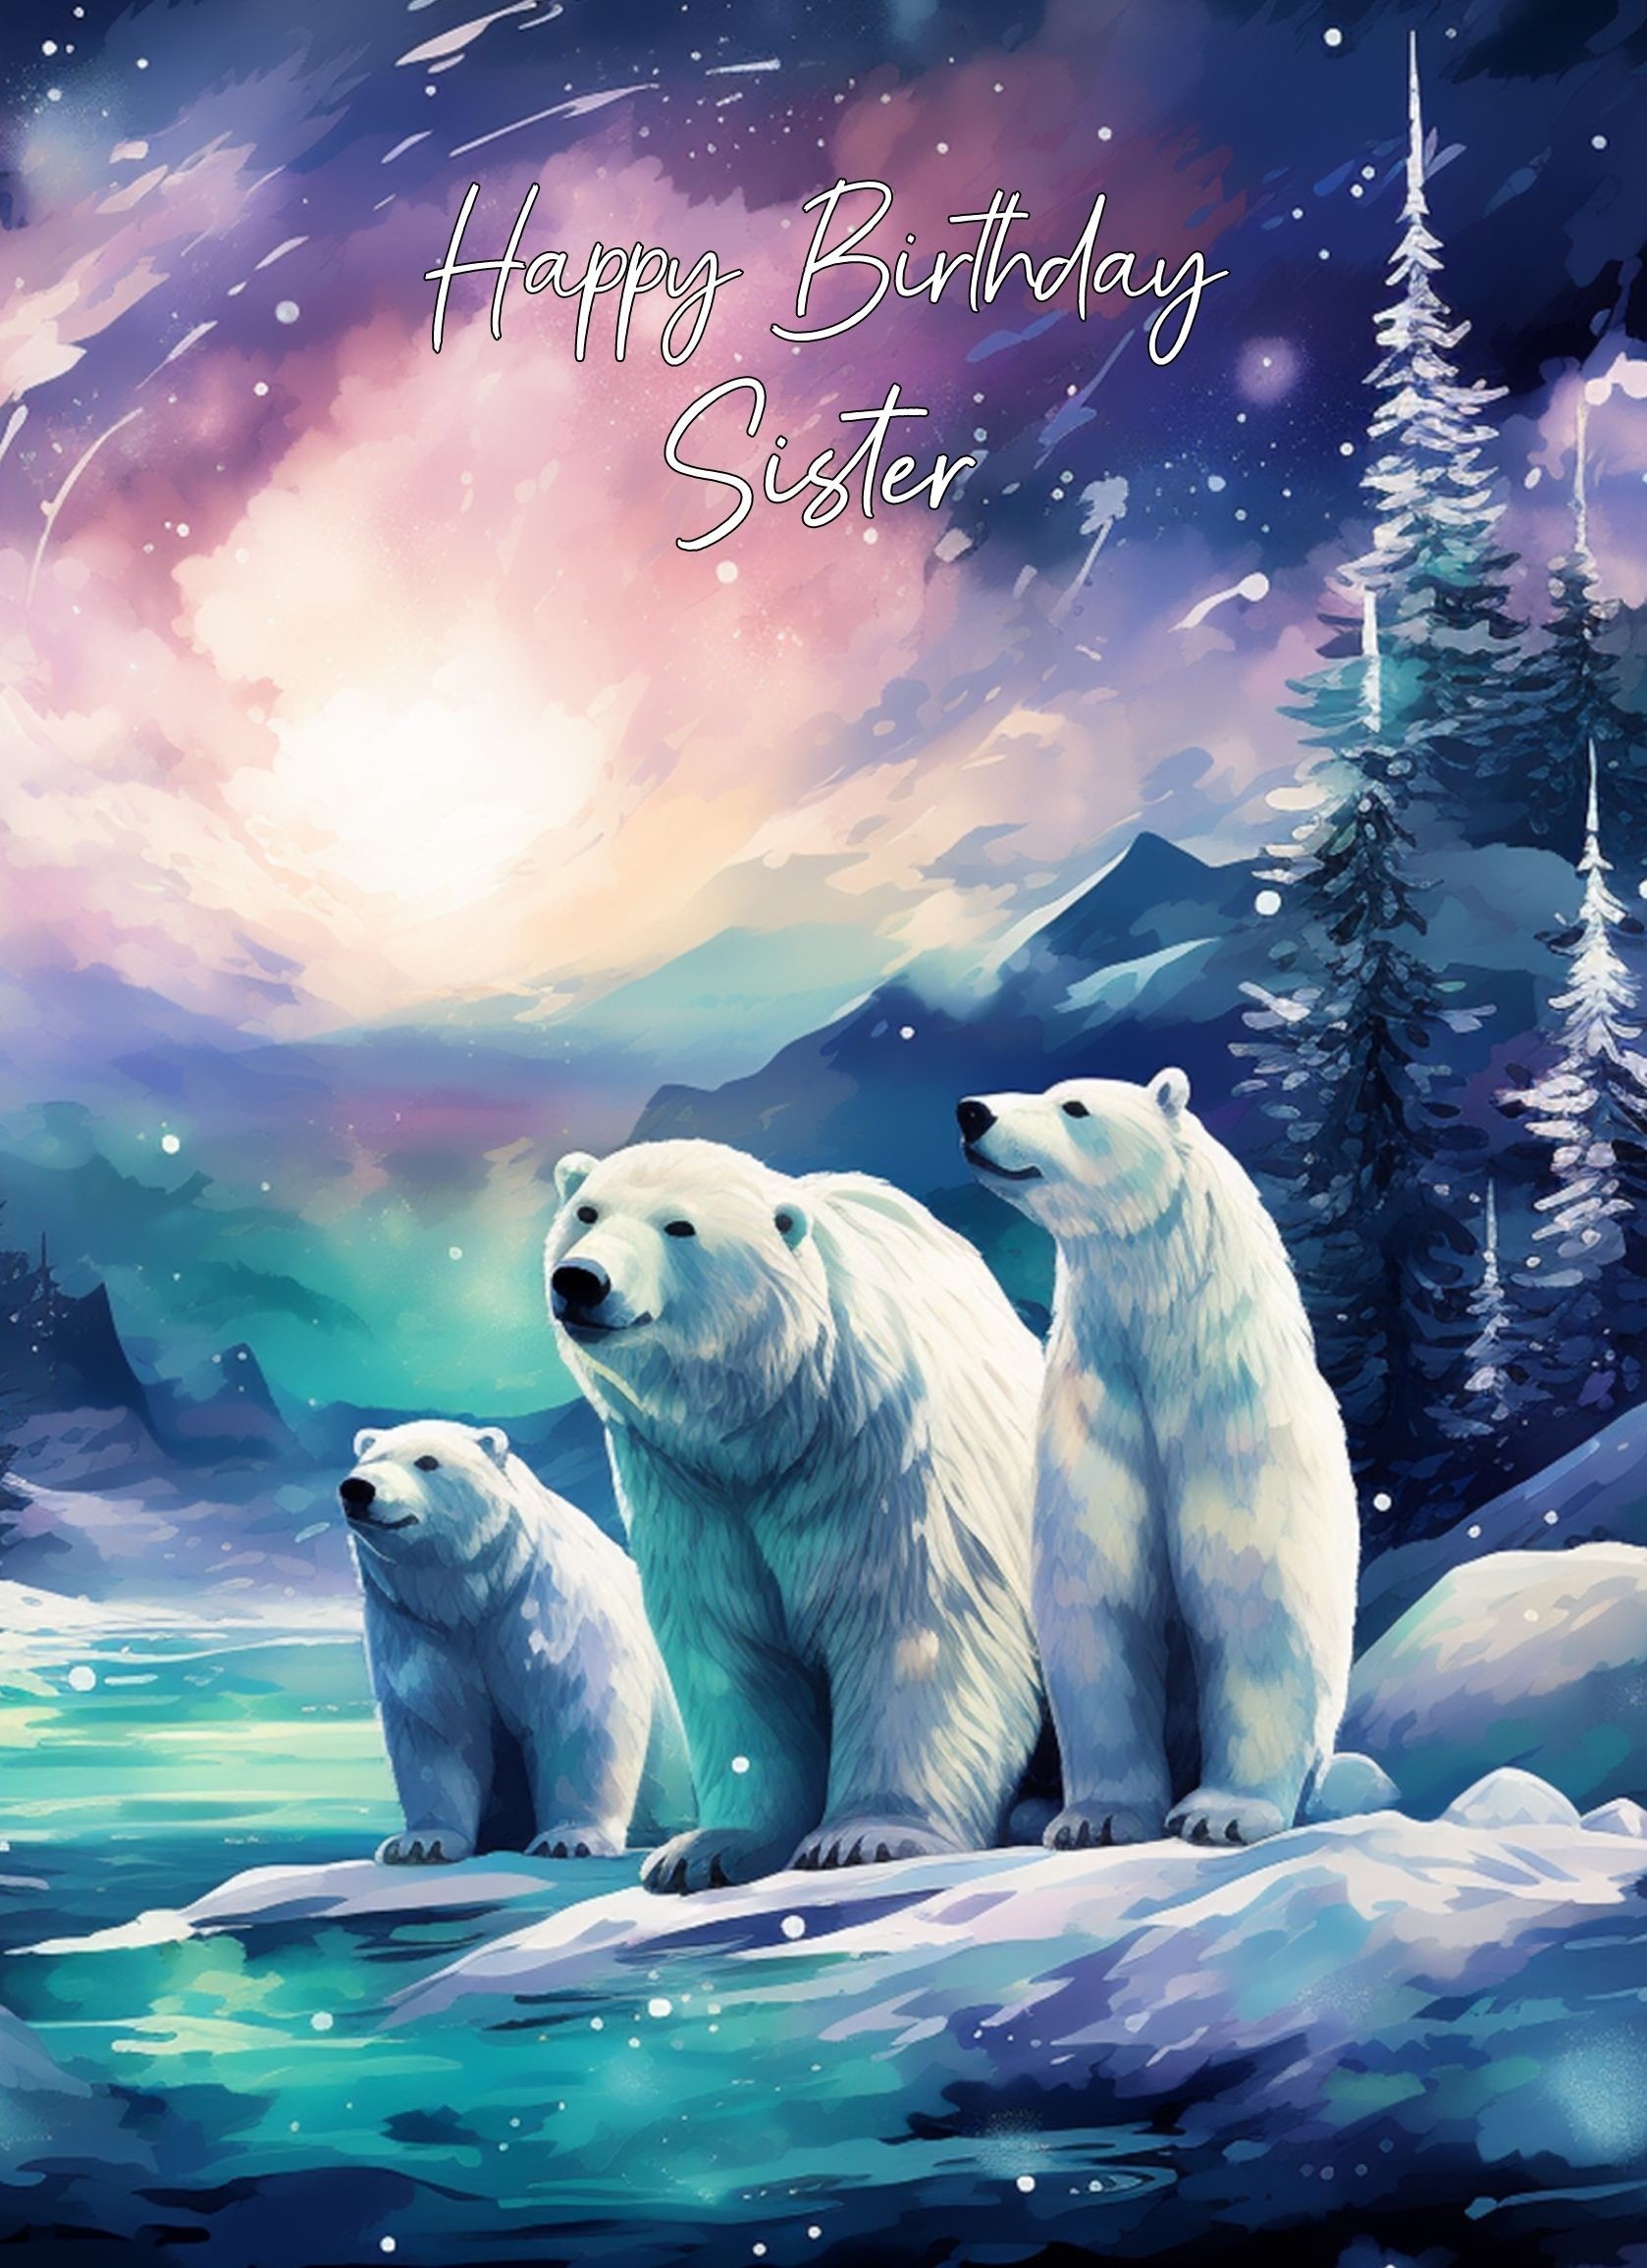 Polar Bear Art Birthday Card For Sister (Design 1)